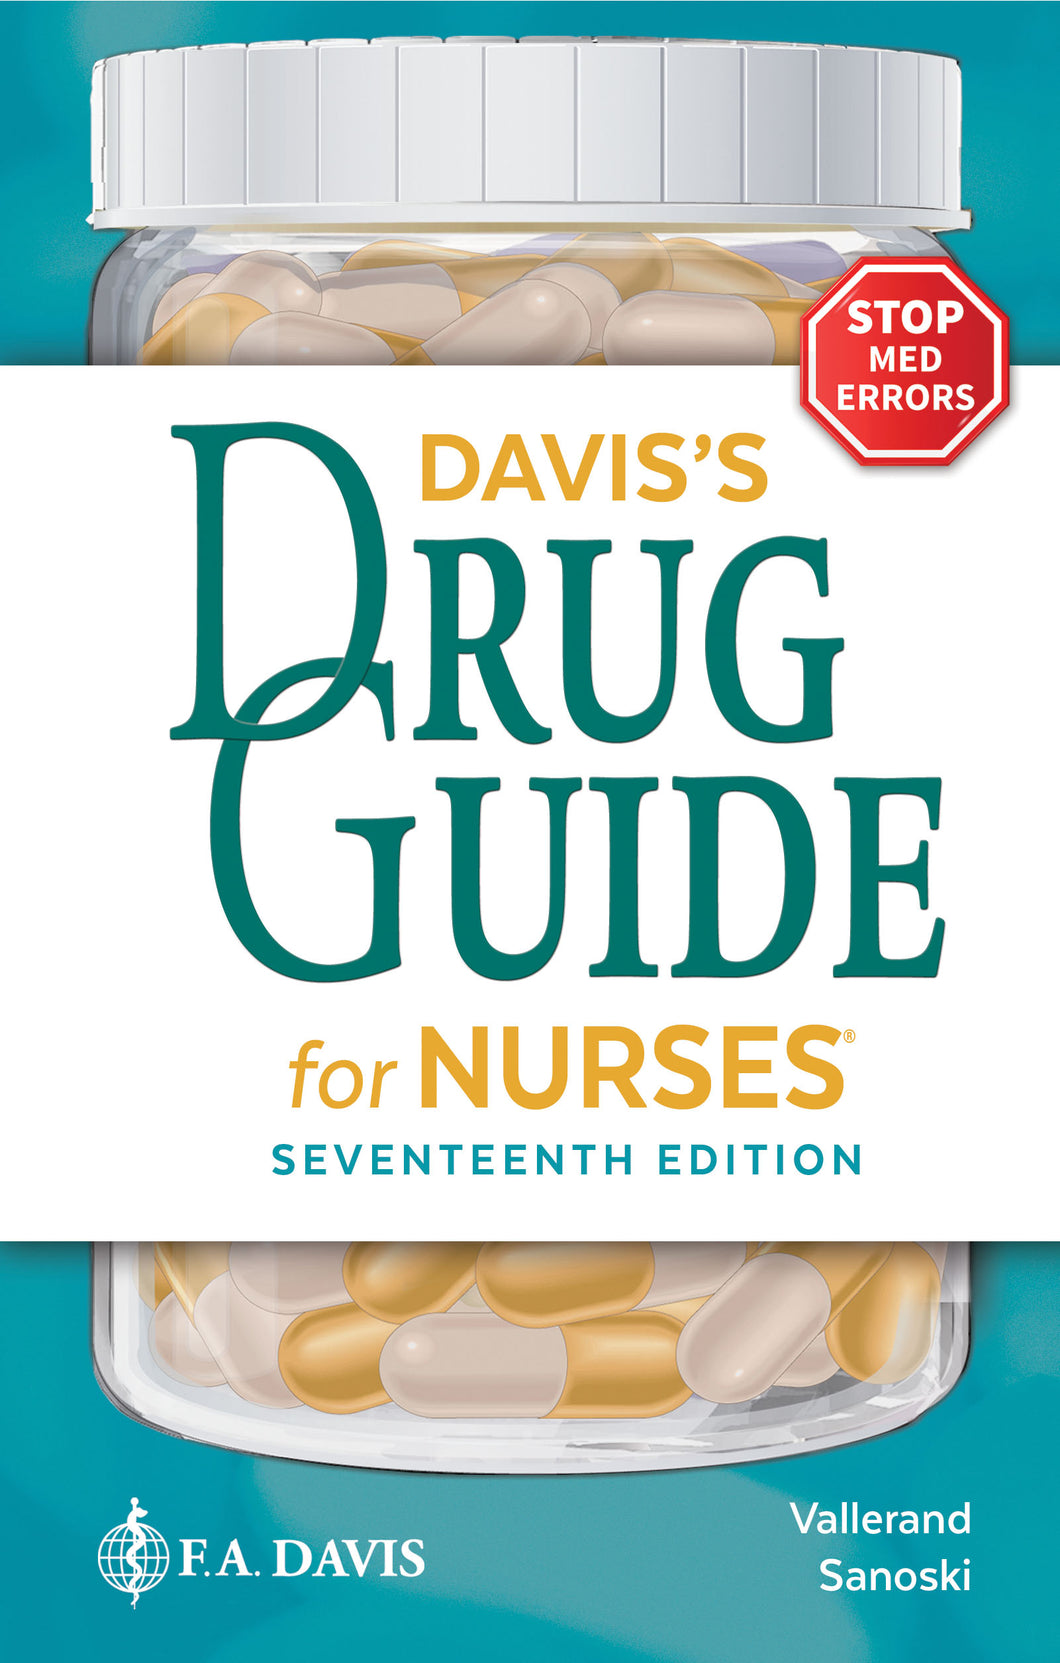 Davis's Drug Guide for Nurses, 17th ed.